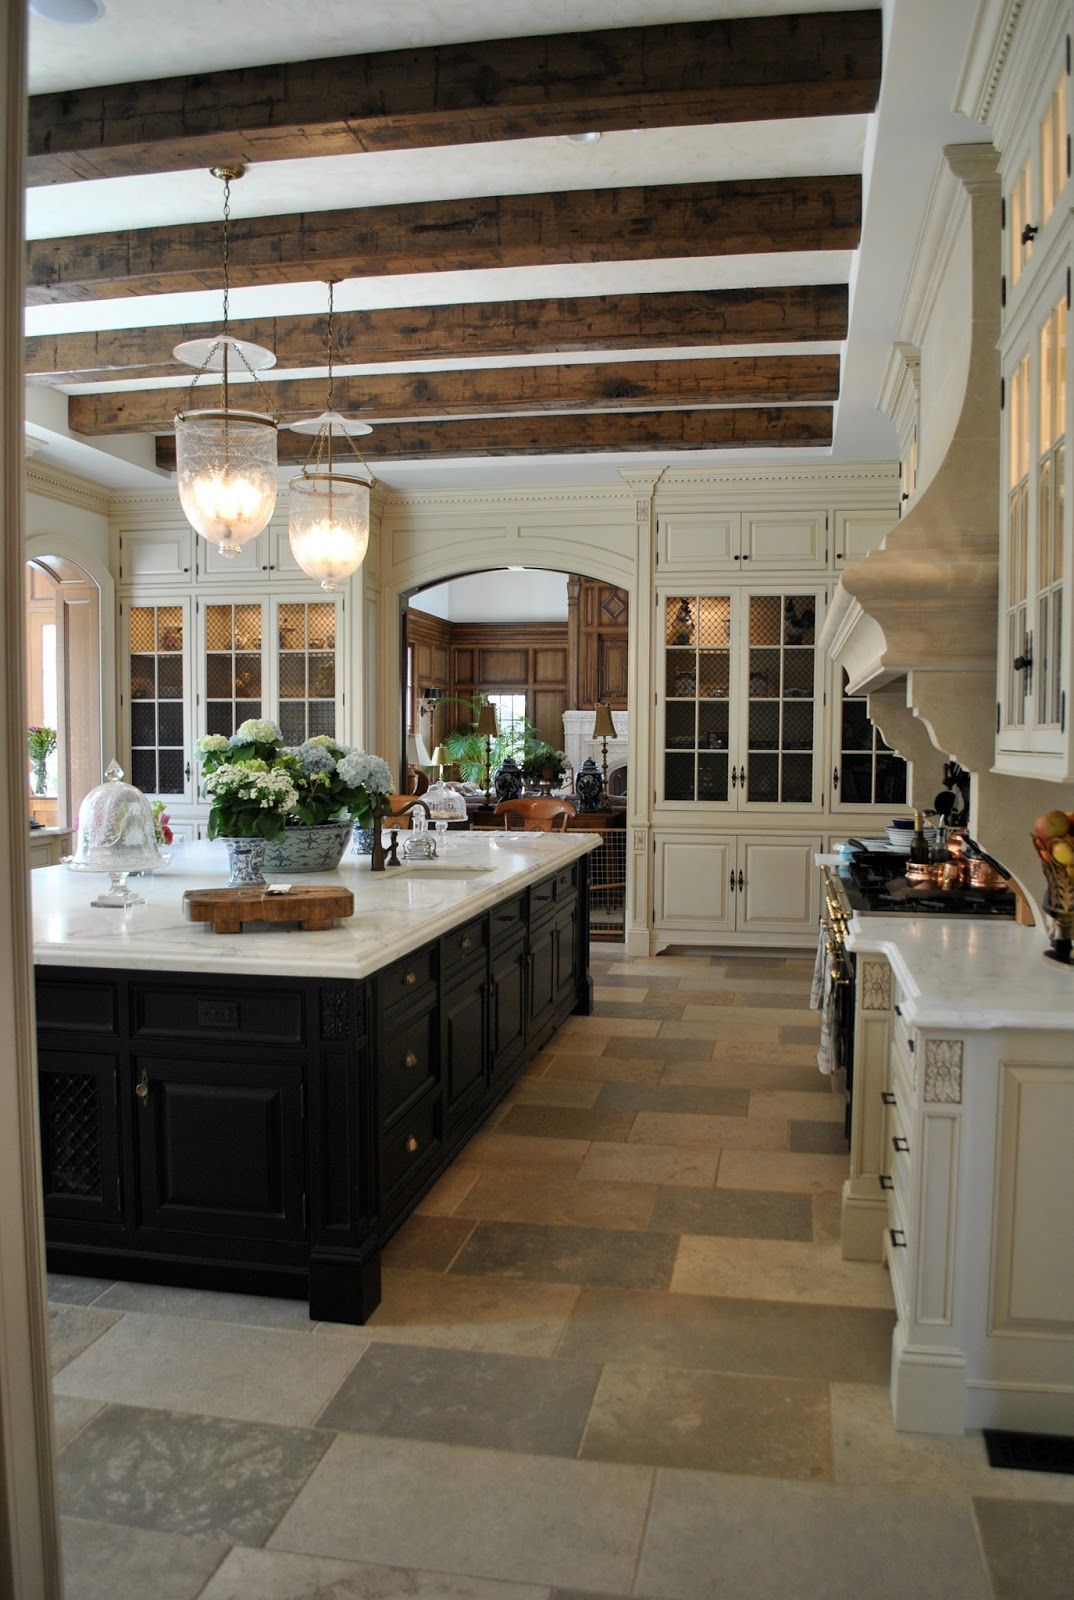 beautiful kitchen, full of character. love the dark beams, limestone floor, huge